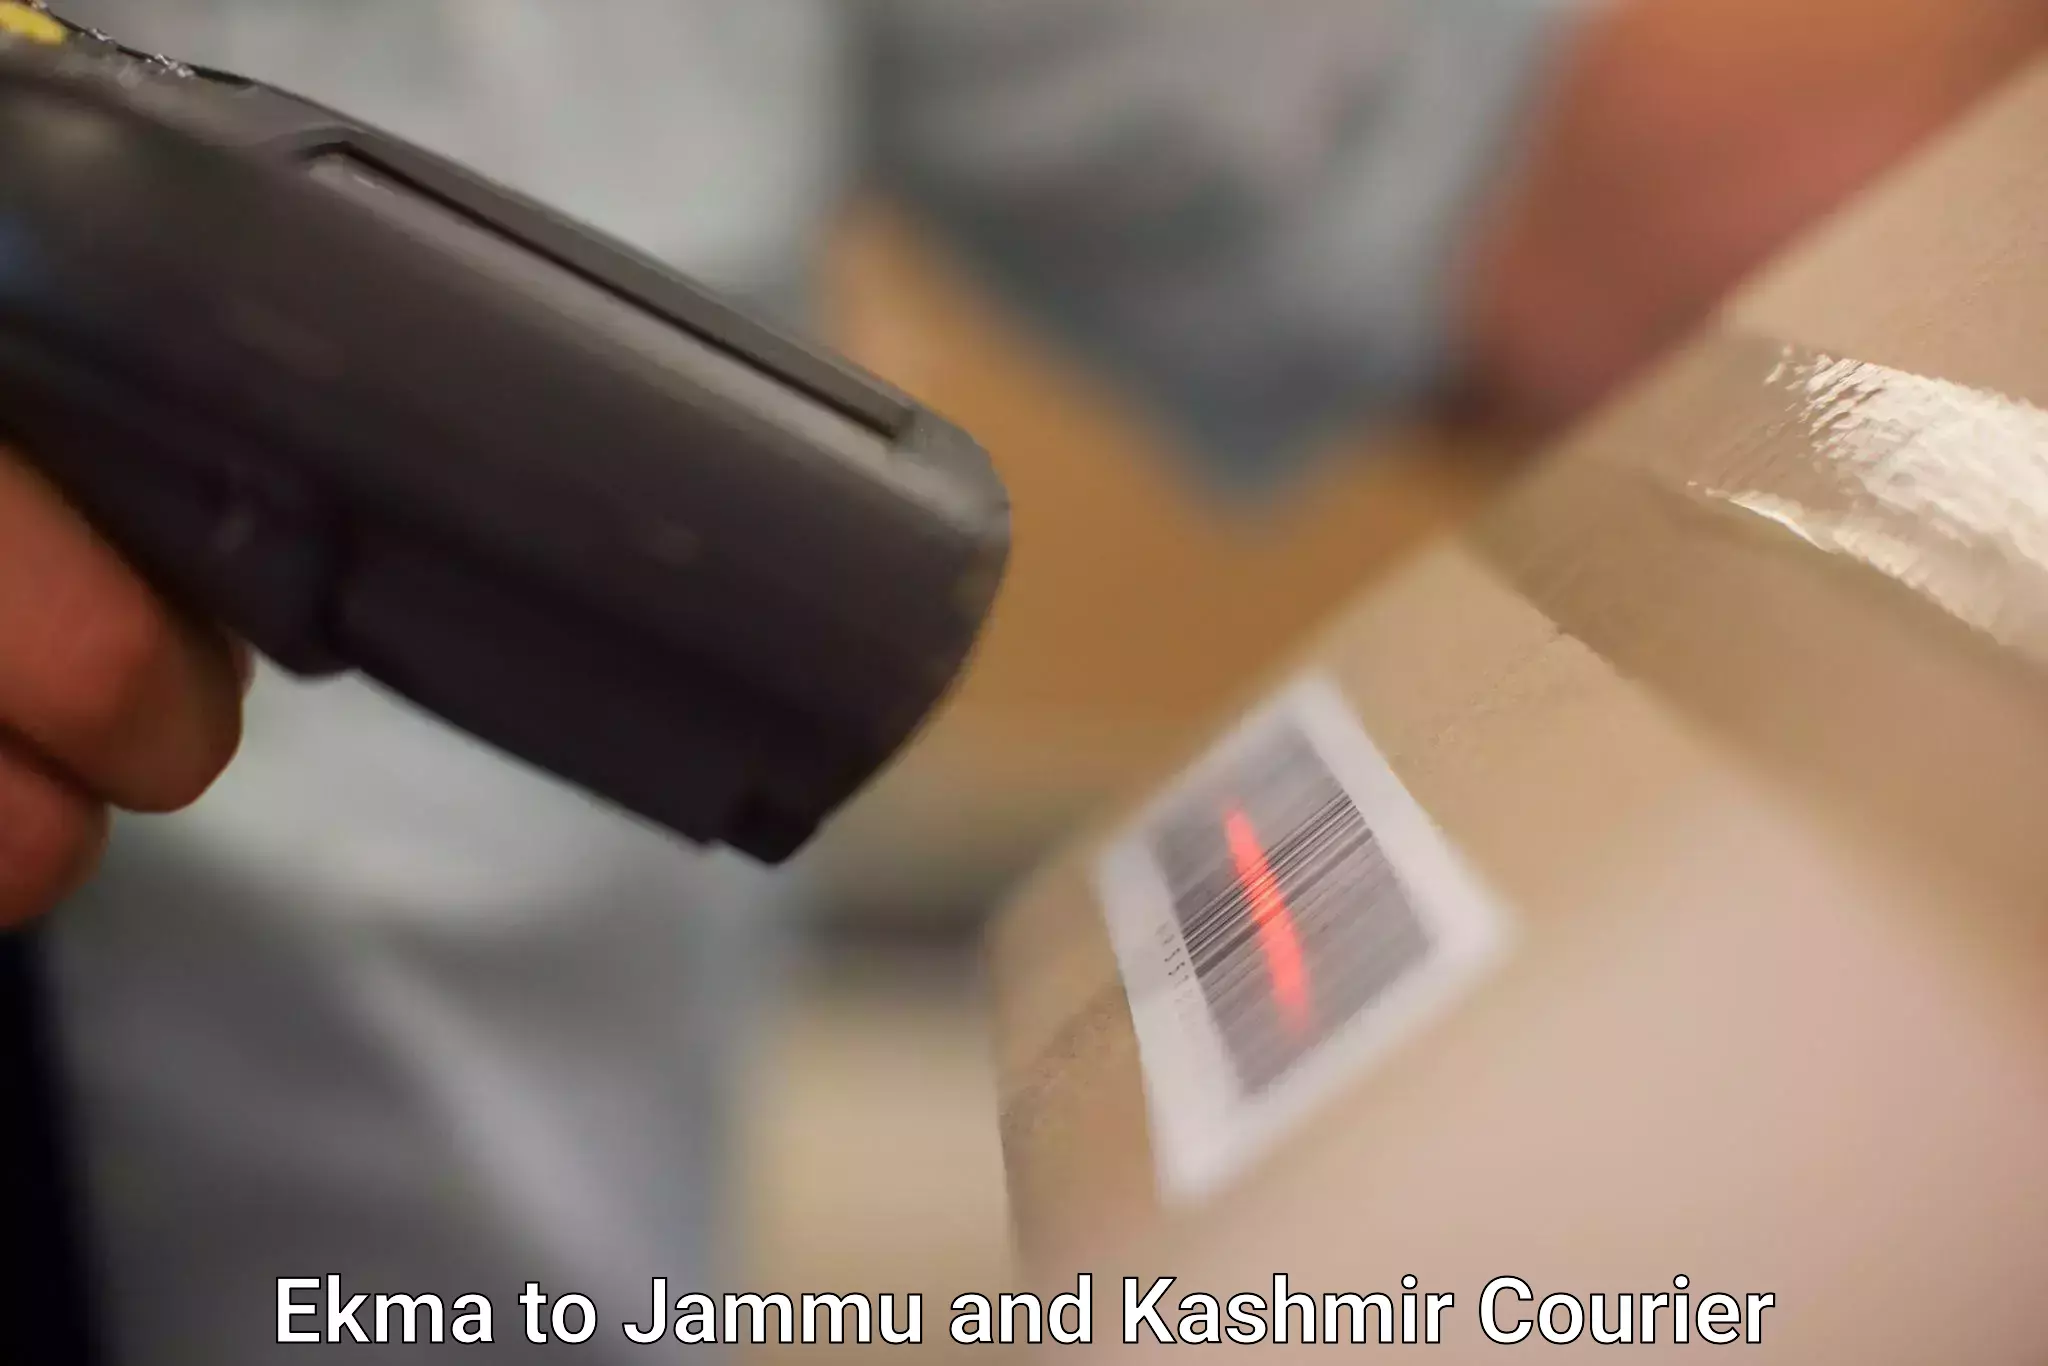 Tracking updates Ekma to Jammu and Kashmir